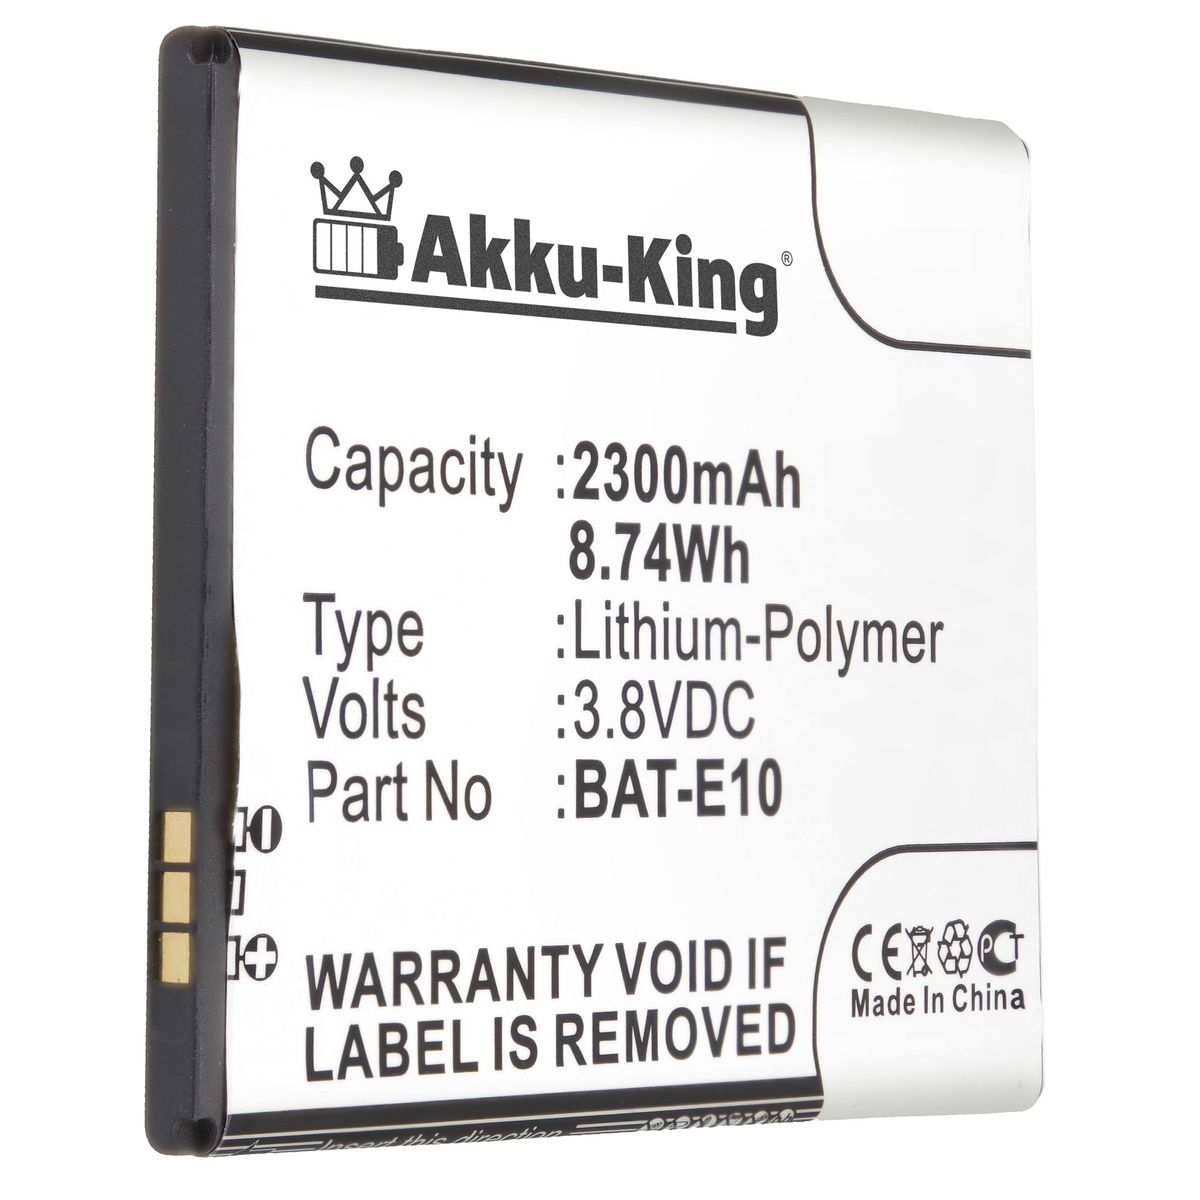 Handy-Akku, BAT-E10 2300mAh 3.8 für Acer Li-Polymer AKKU-KING Akku Volt,